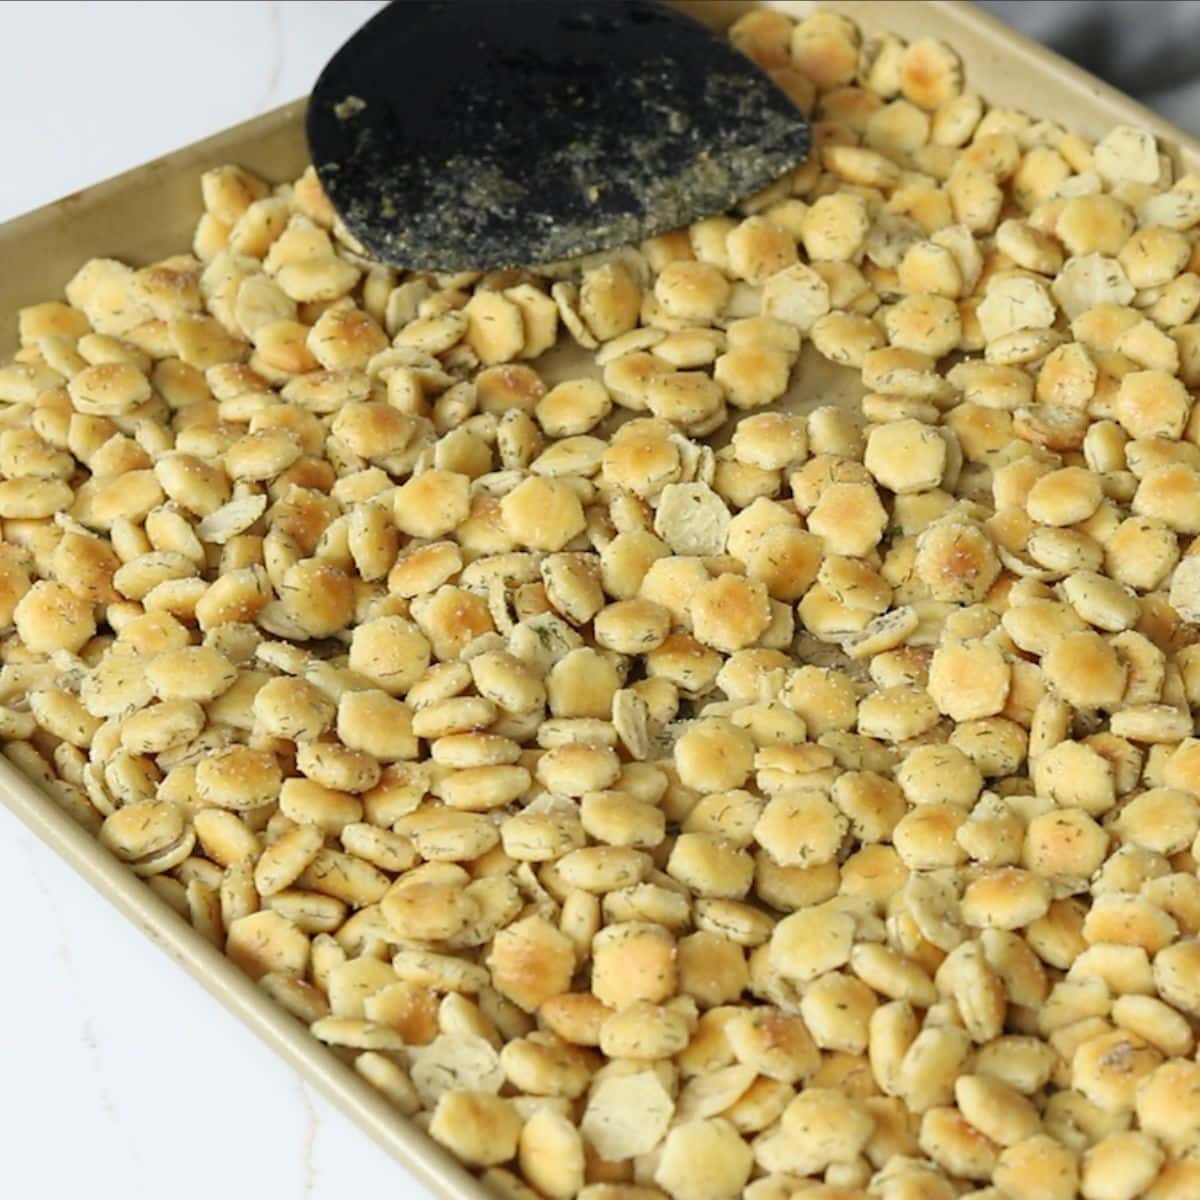 Seasoned Oyster crackers on a rimmed baking sheet